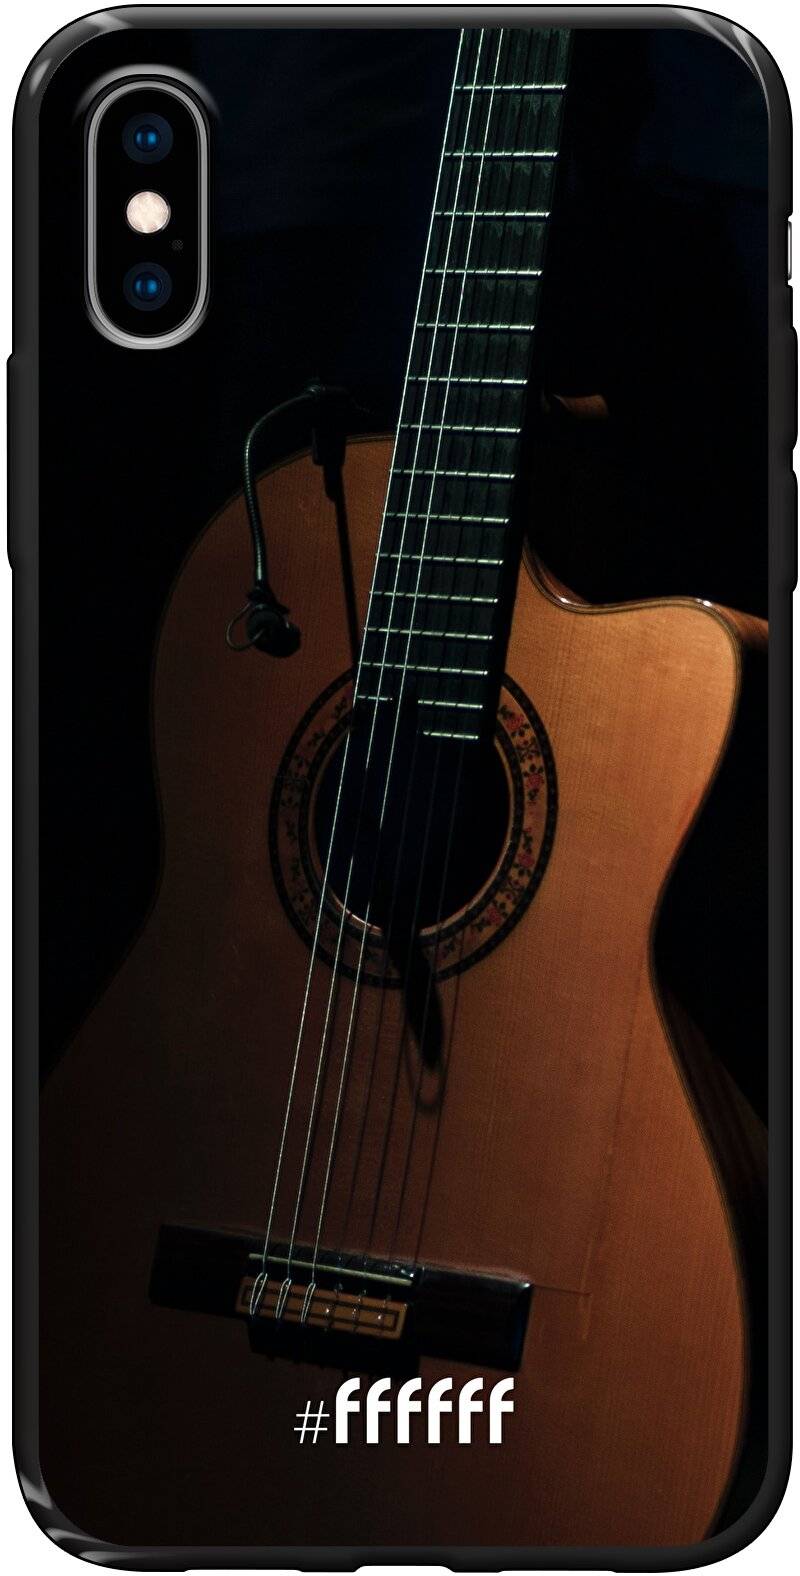 Guitar iPhone X